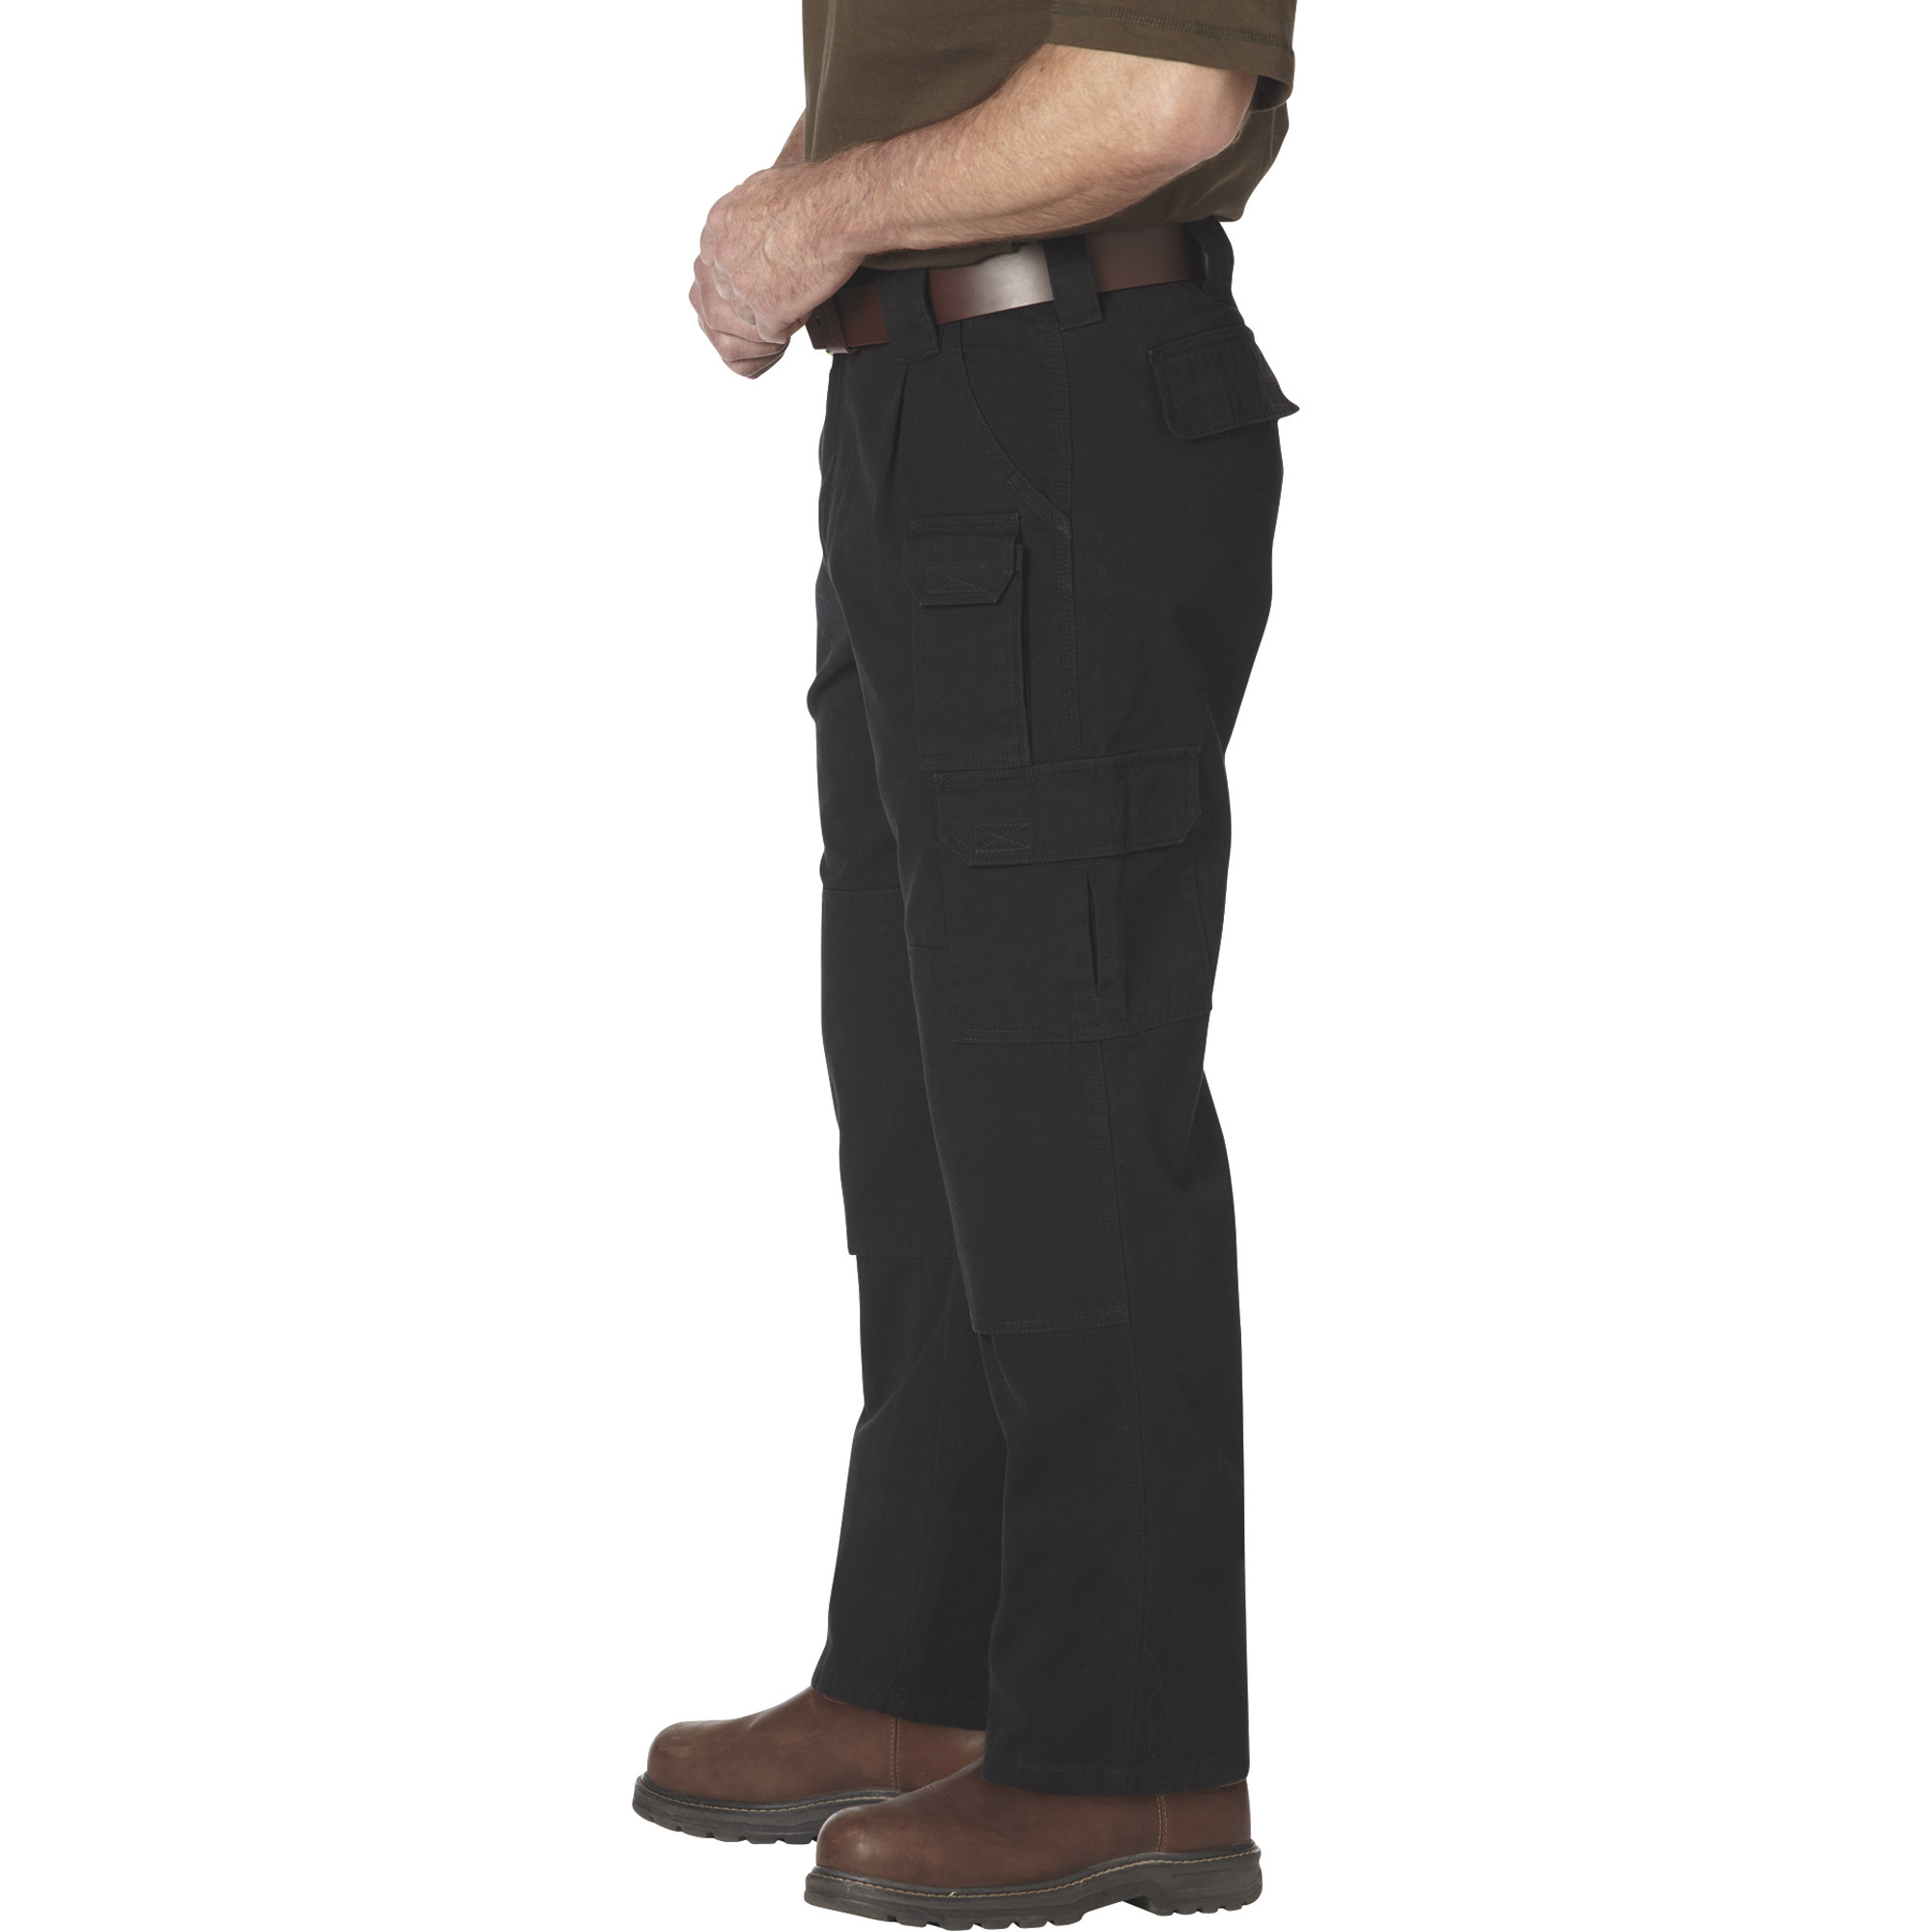 Gravel Gear Men's 7-Pocket Tactical Pants with Teflon - Black, 40Inch Waist x 34Inch Inseam